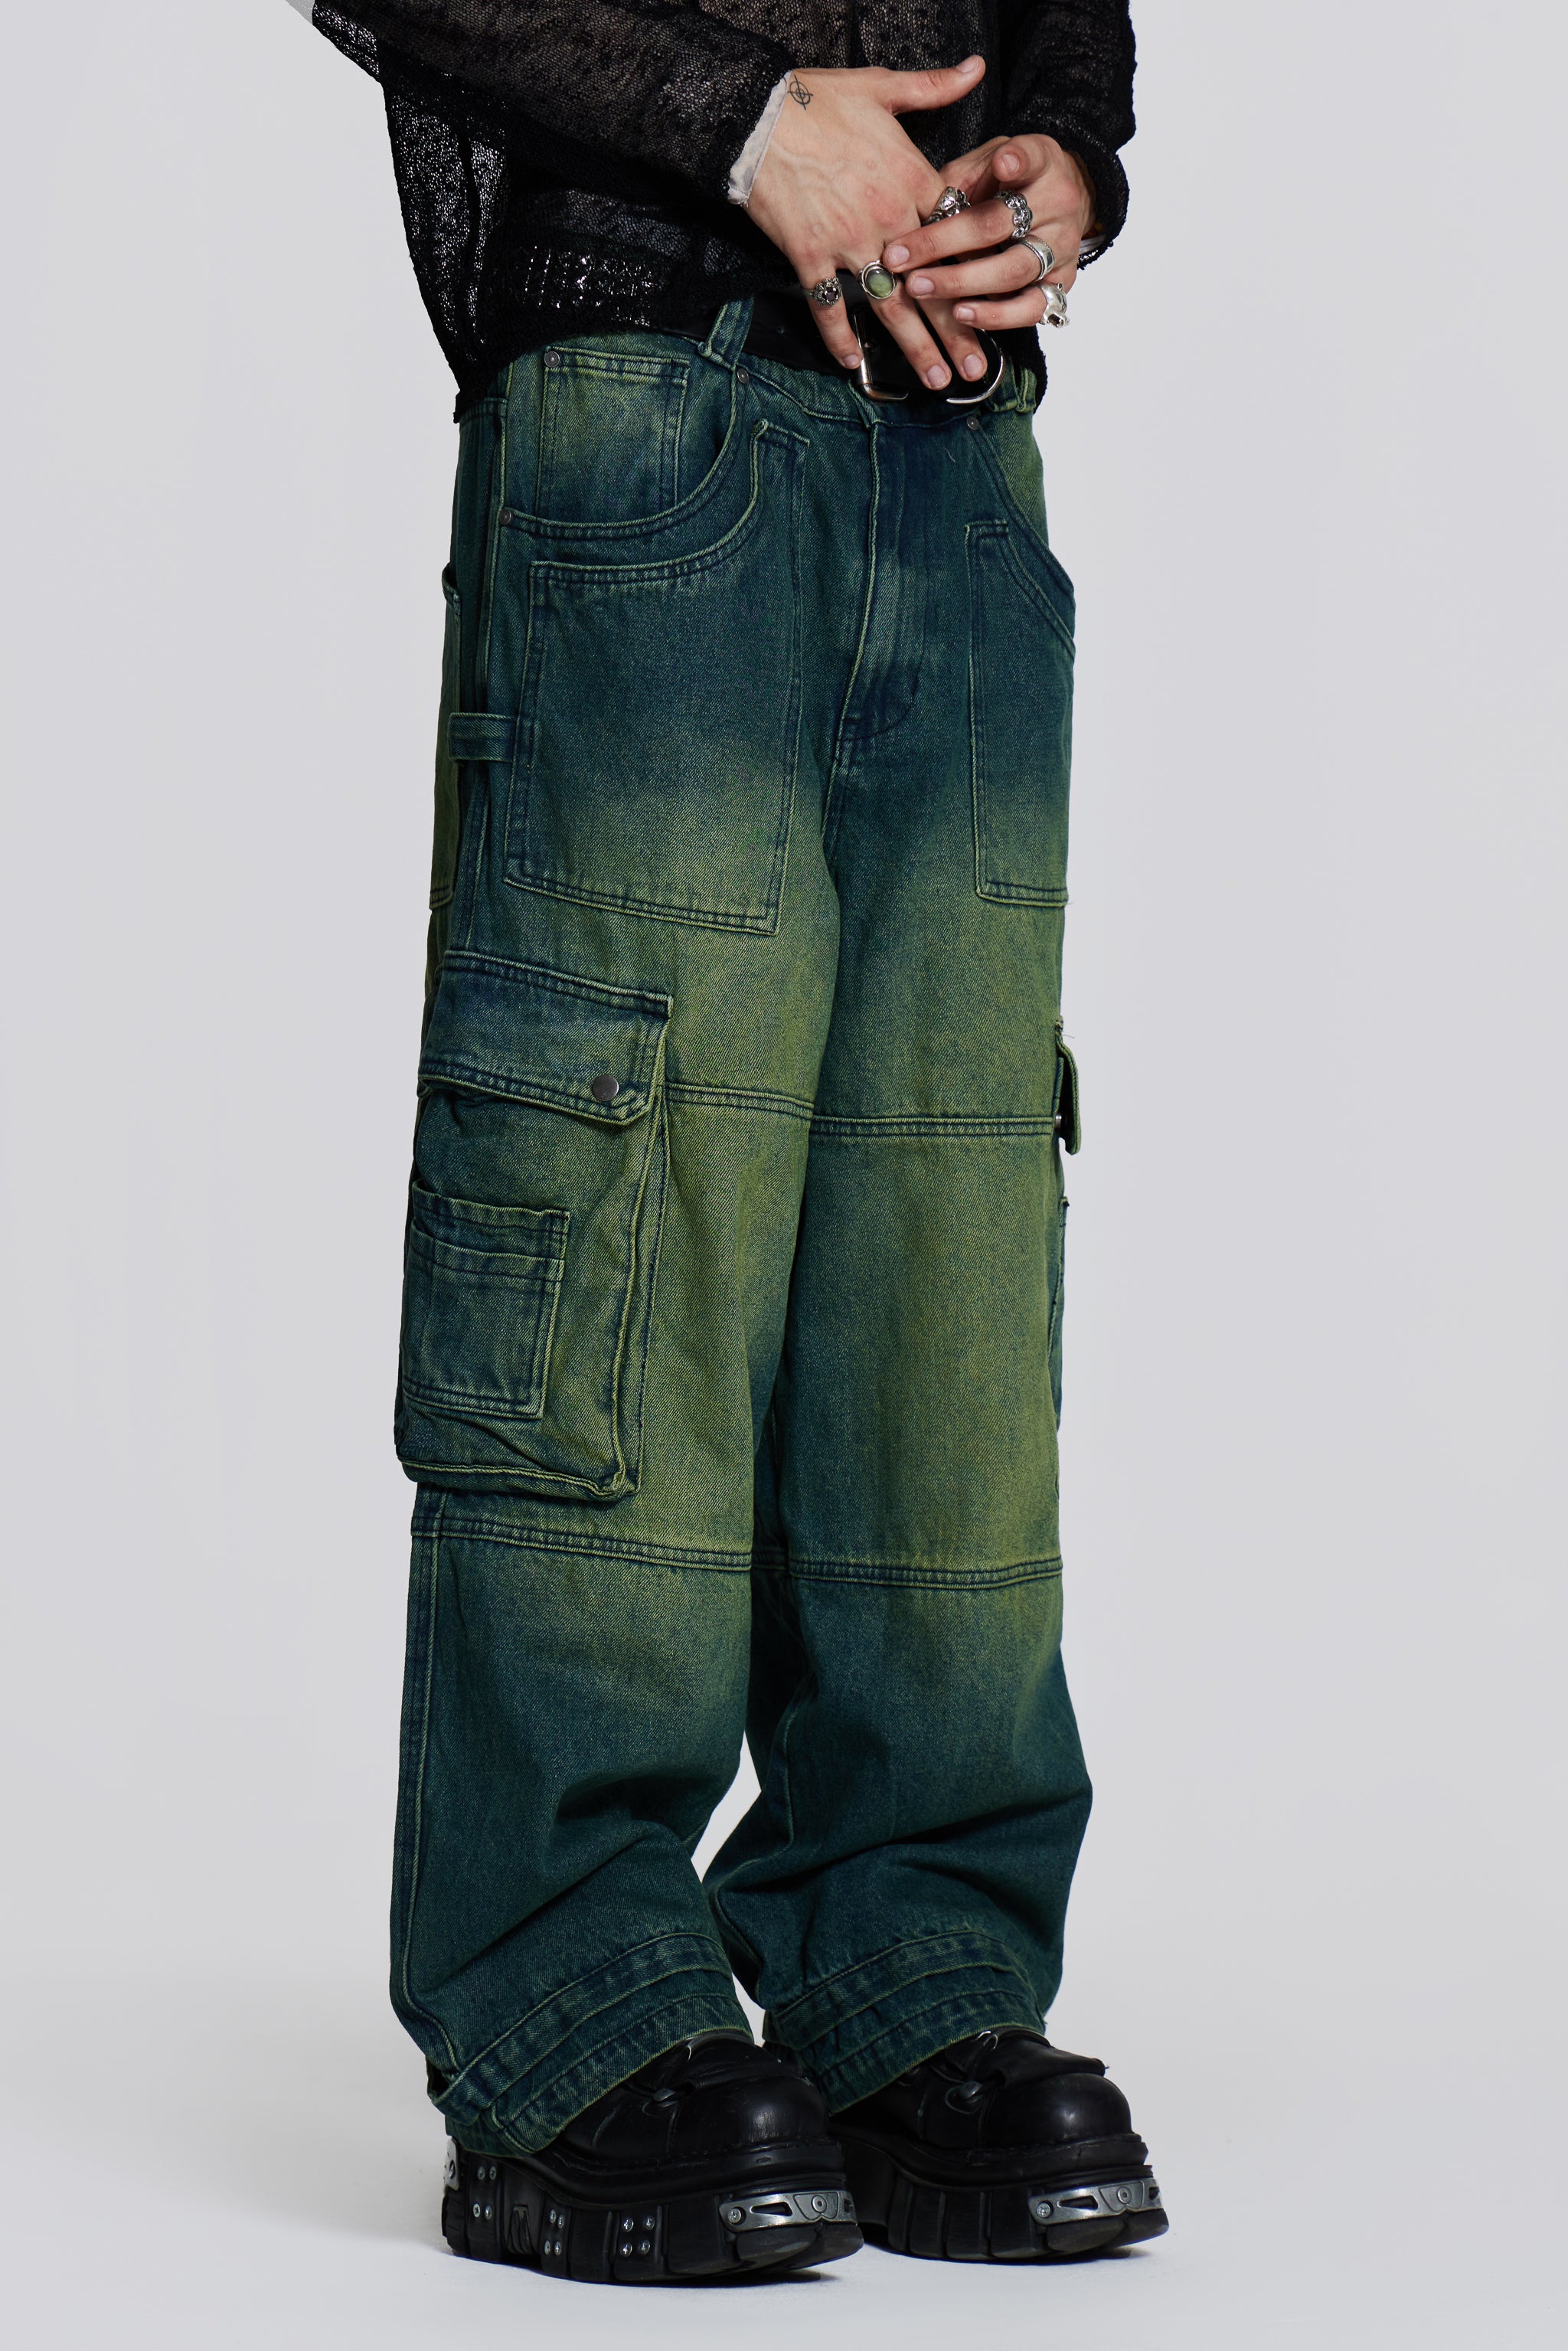 W2C jaded london sandblast jeans : r/FashionReps